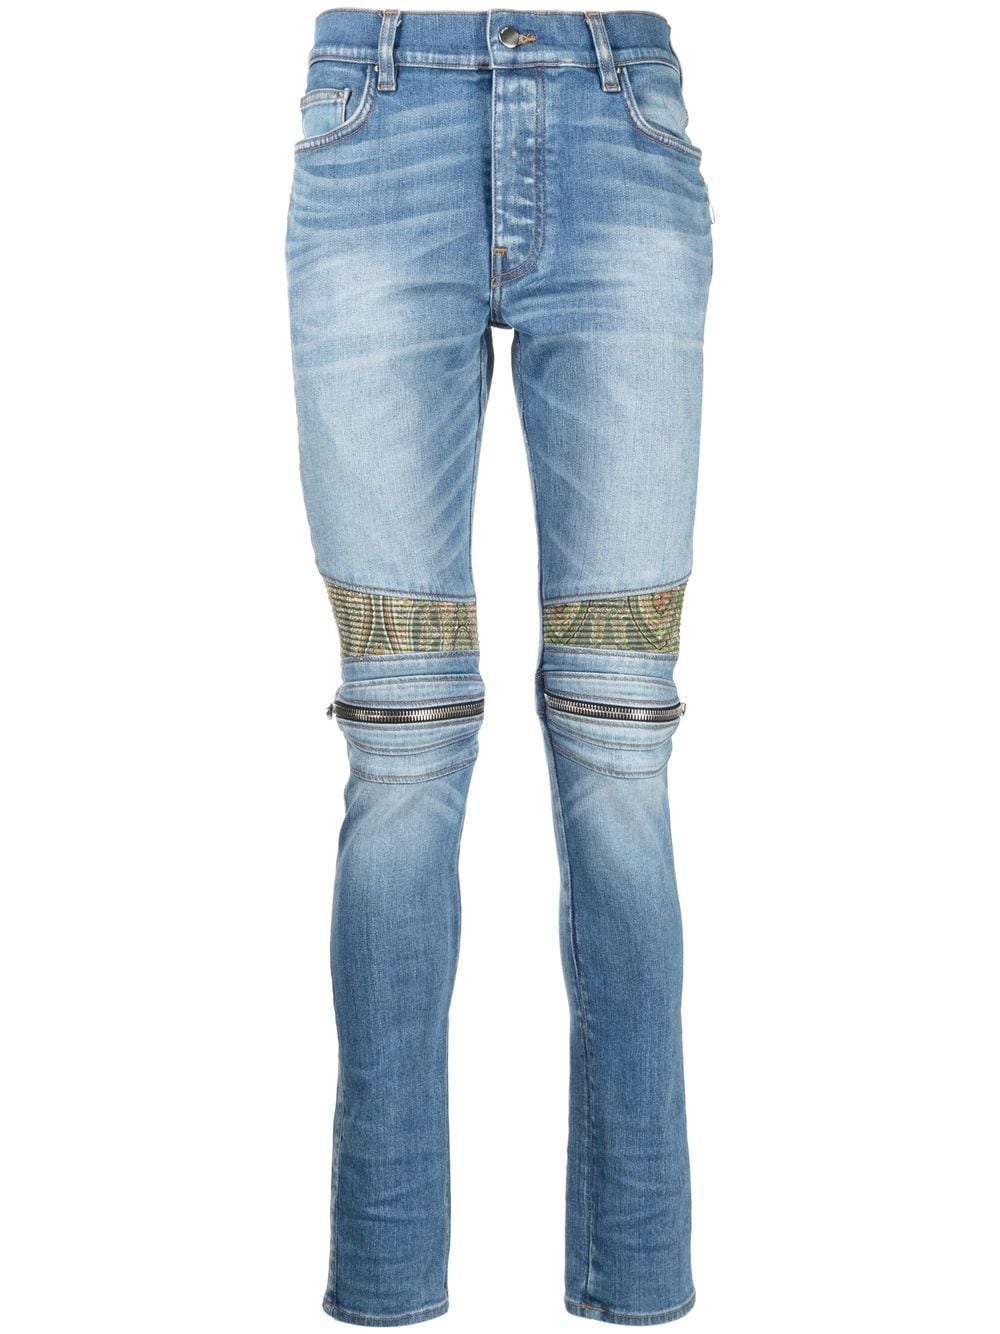 paisley-patch skinny jeans